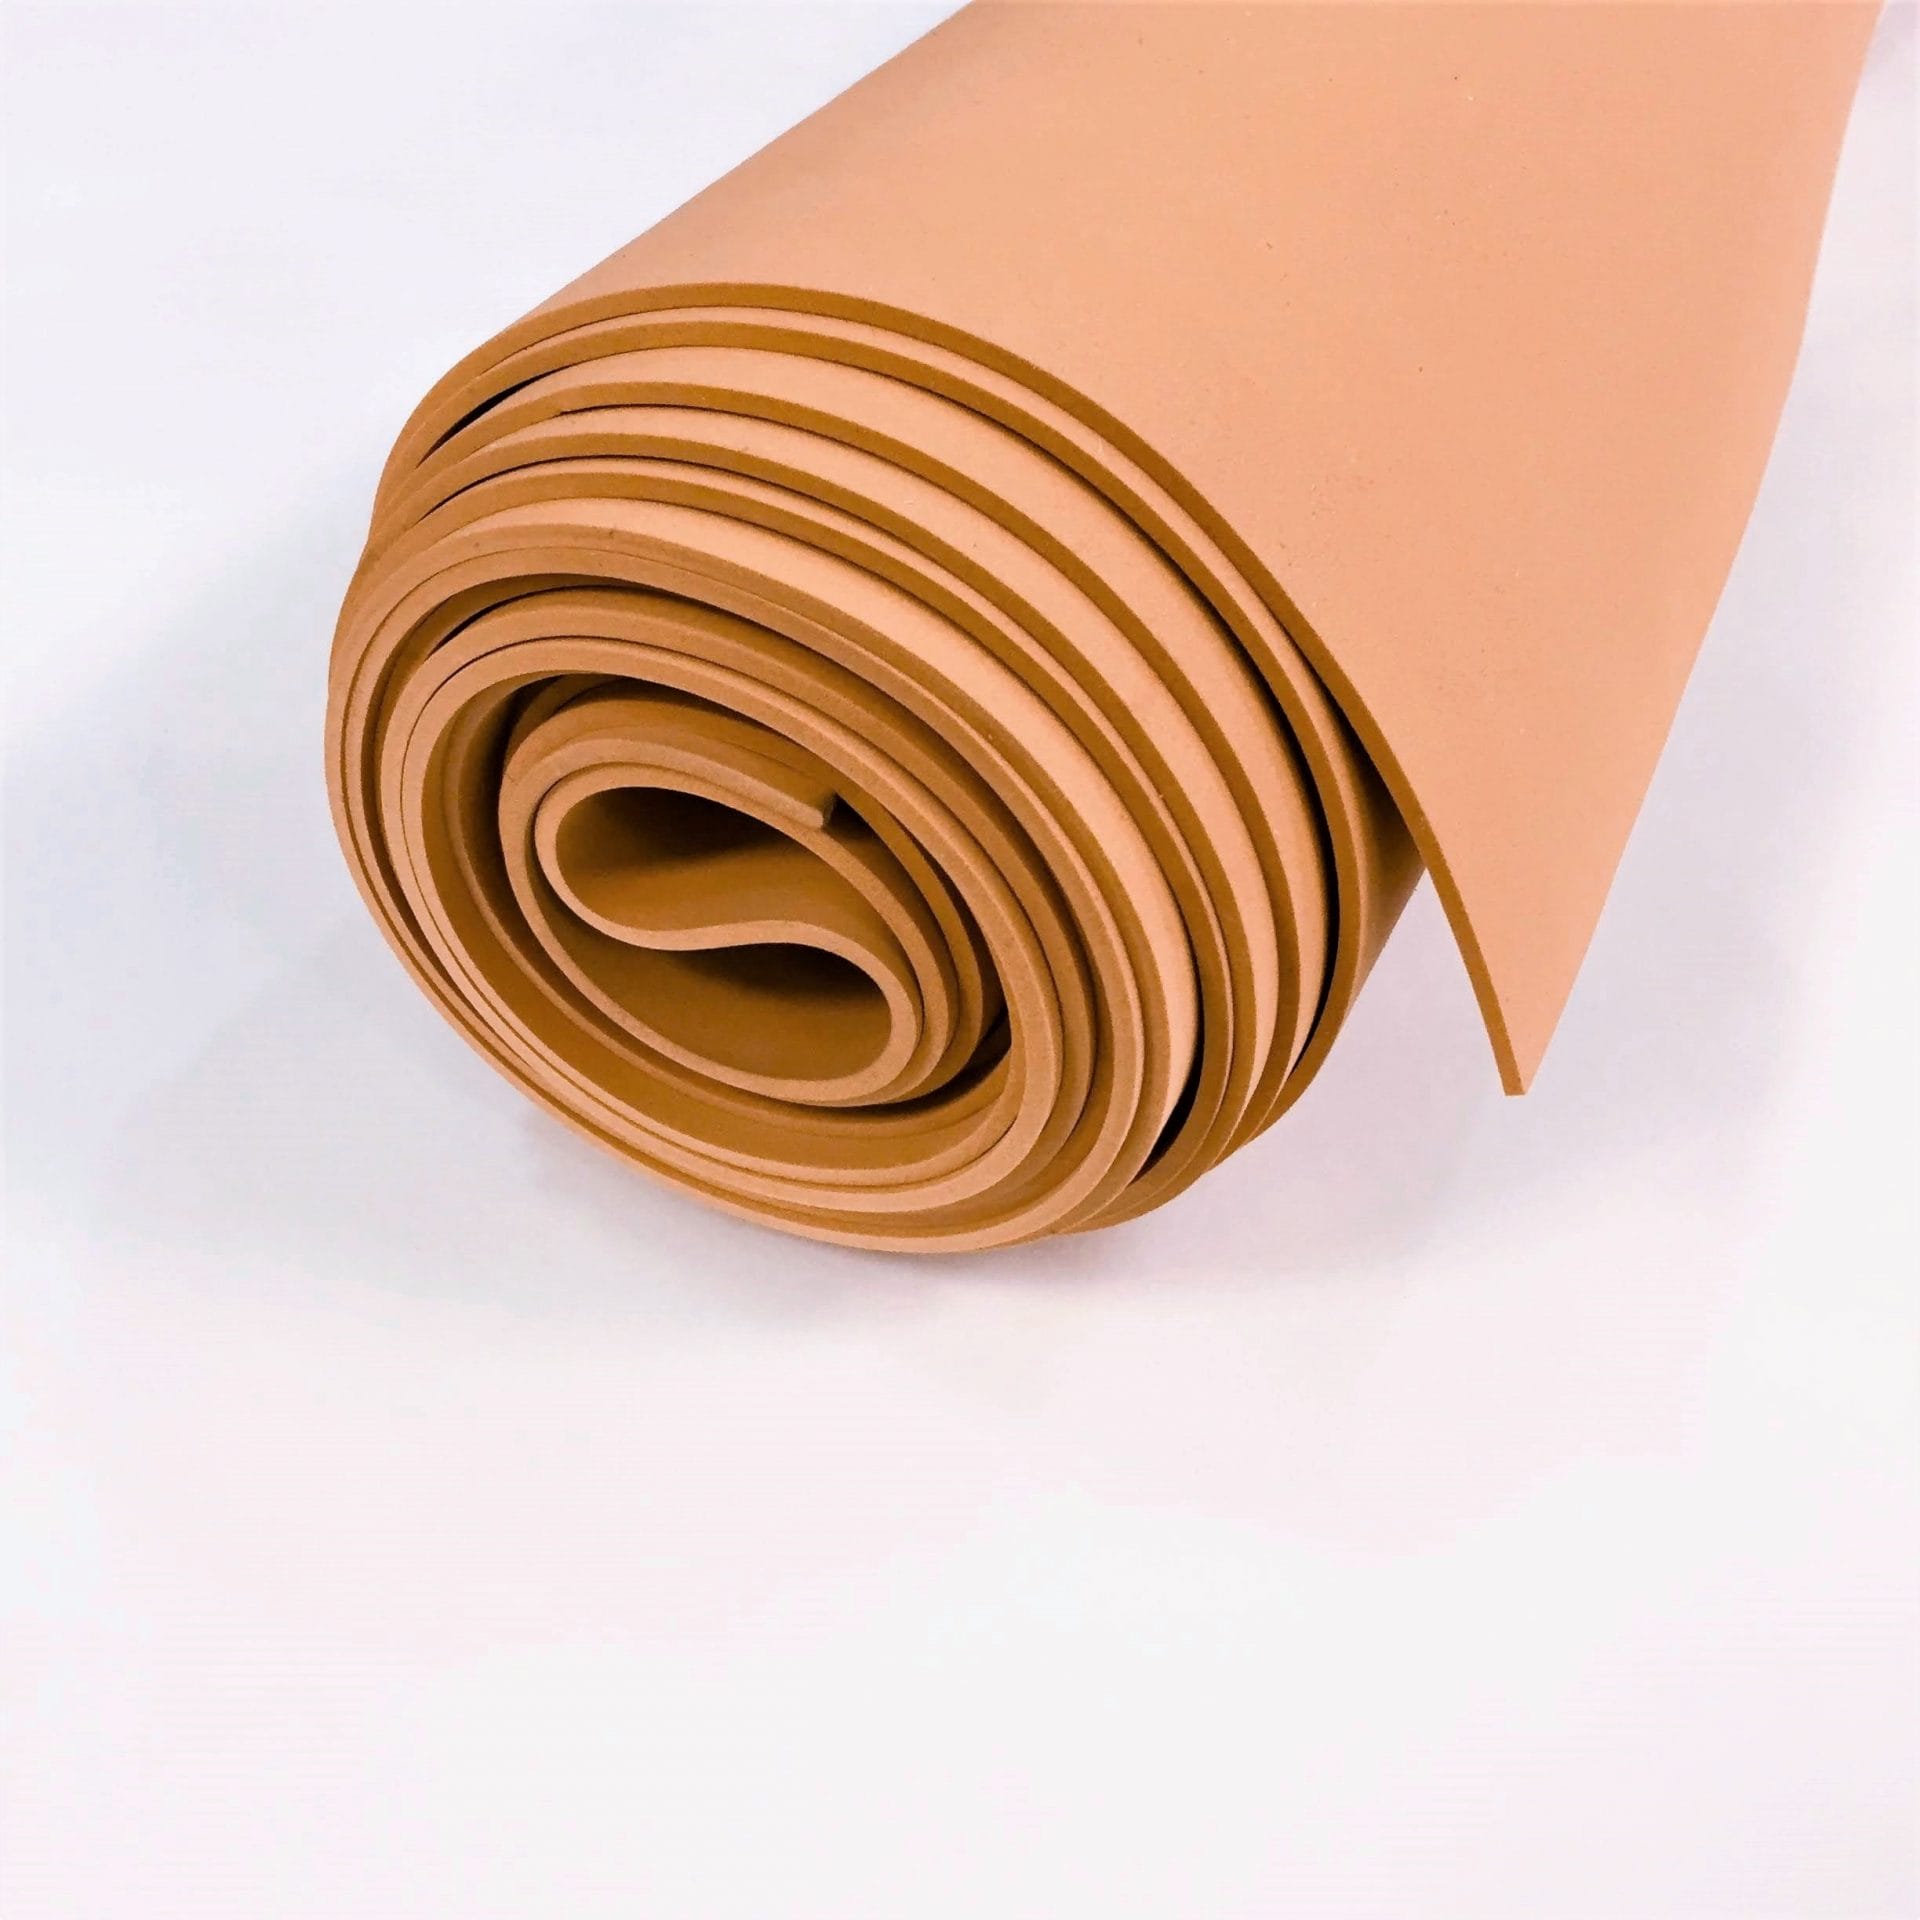 High Density EVA Material Rubber Sheet Cosplay Foam Sheets 1mm 2mm